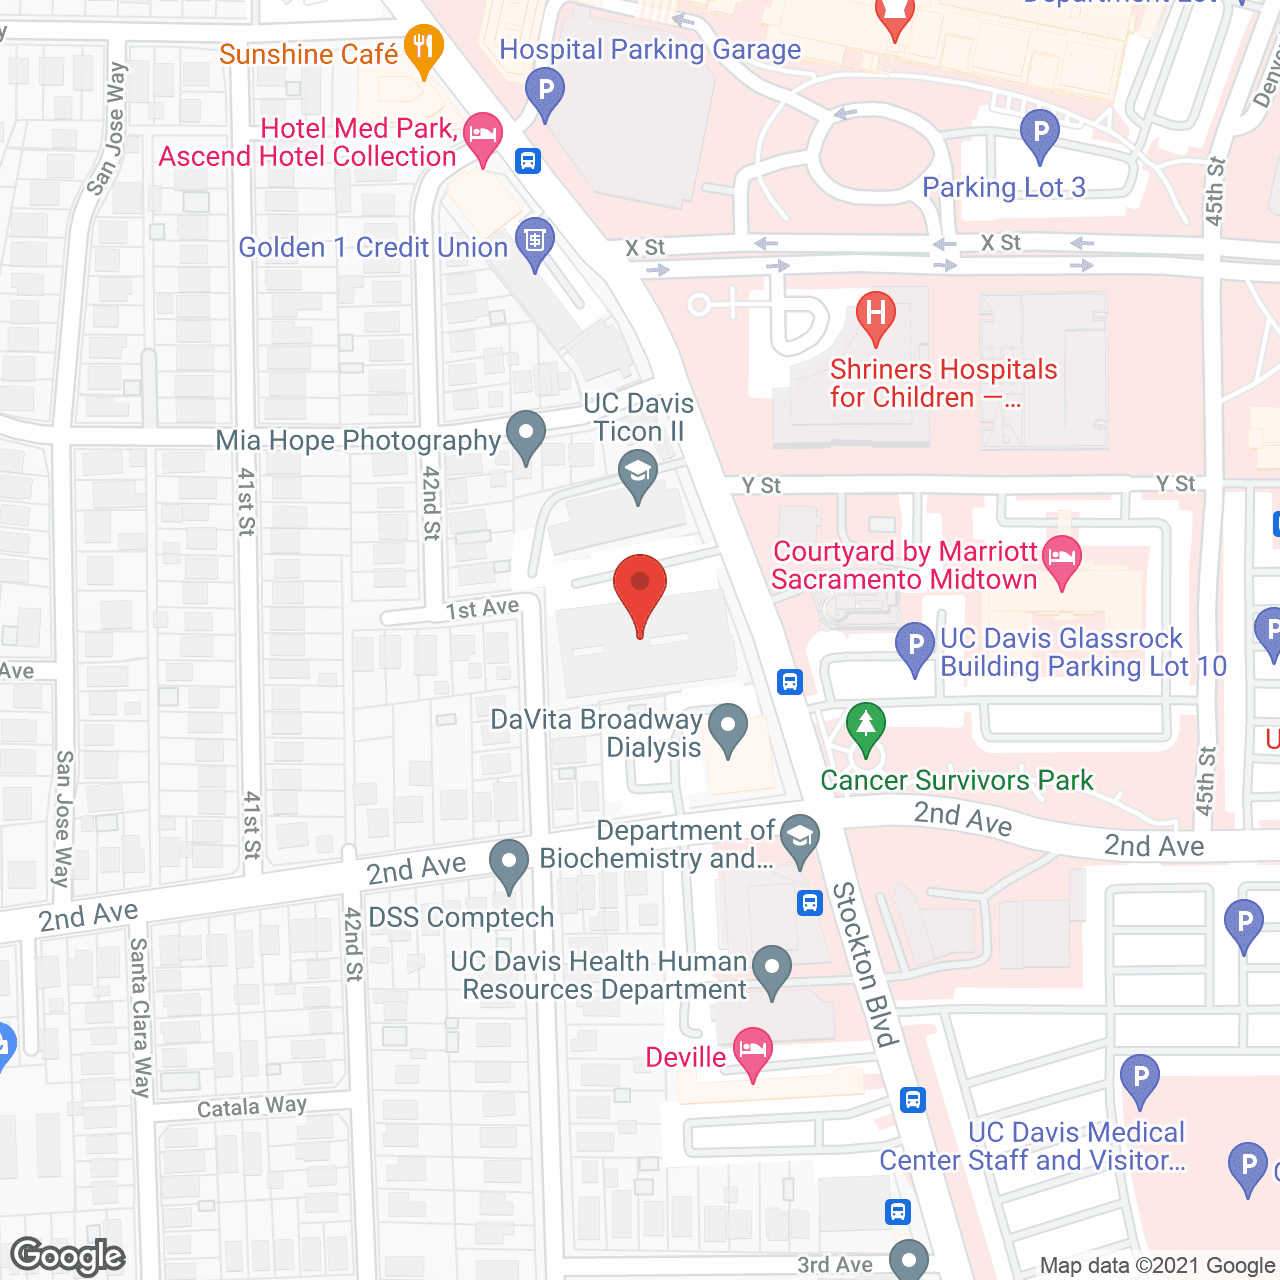 Crestwood Manor Behavioral Health - Sacramento in google map